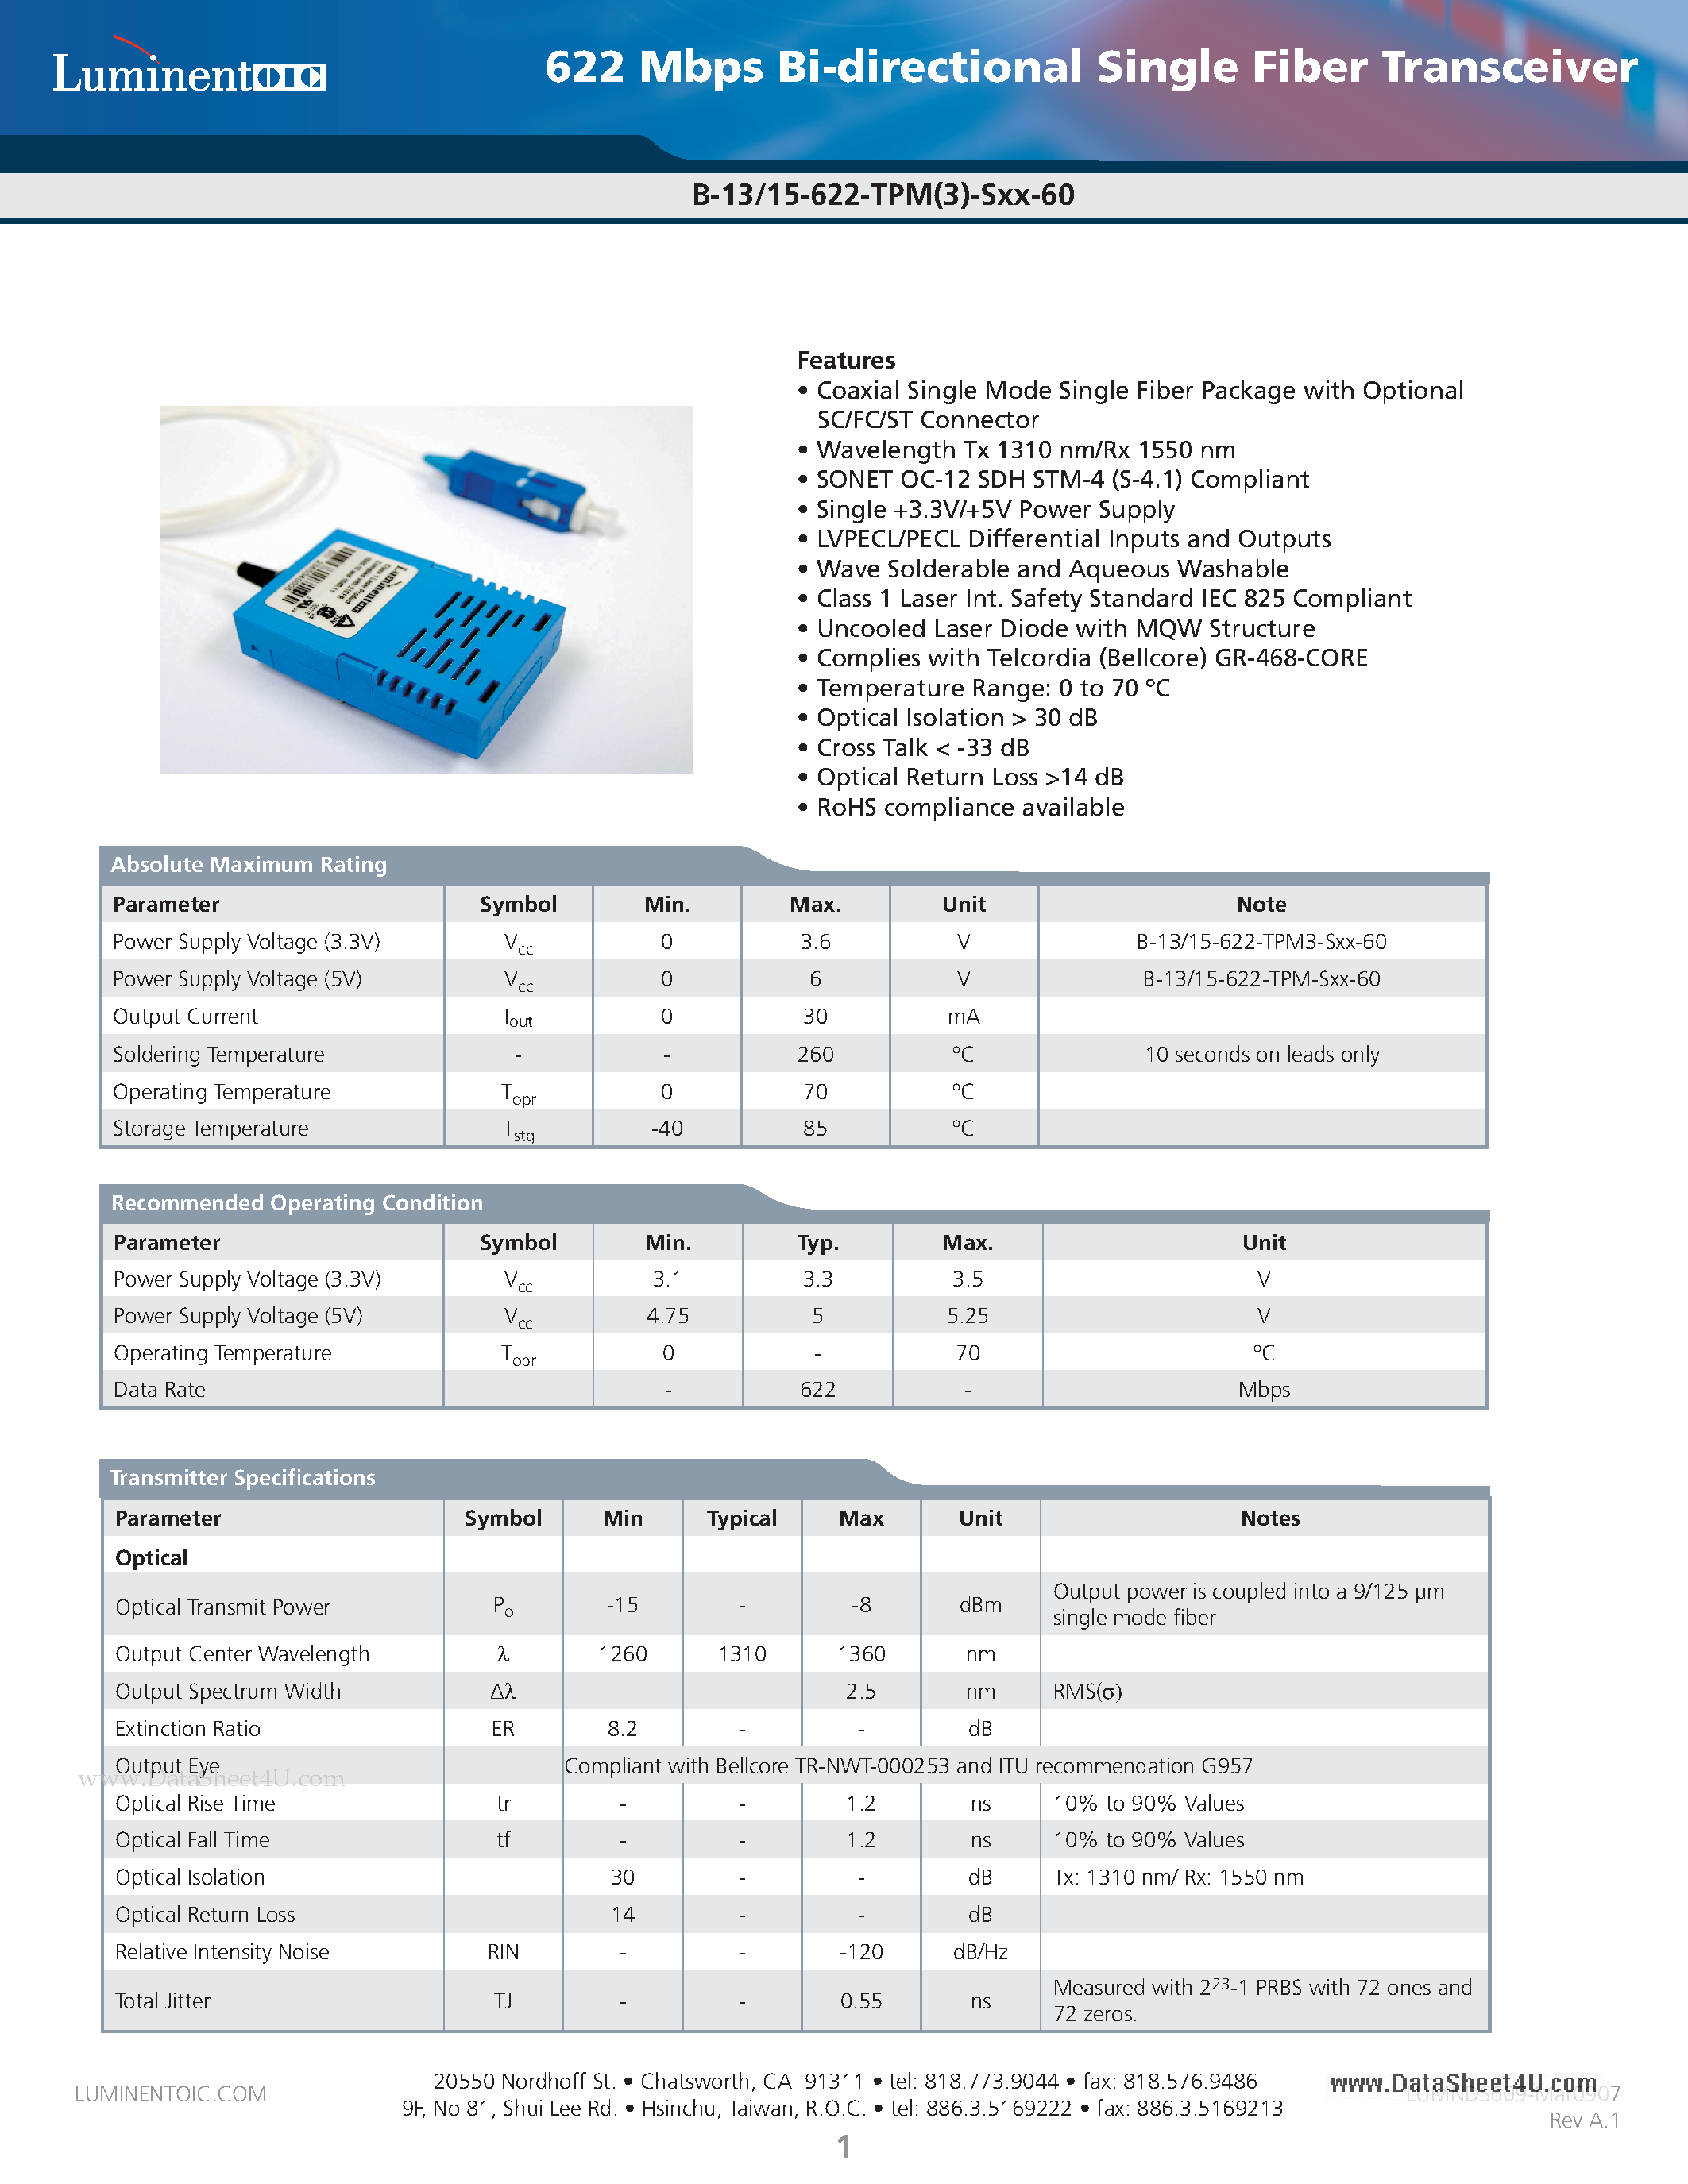 Datasheet B-13-15-622-TPM-SXX-60 - 622 Mbps Bi-directional Single Fiber Transceiver page 1